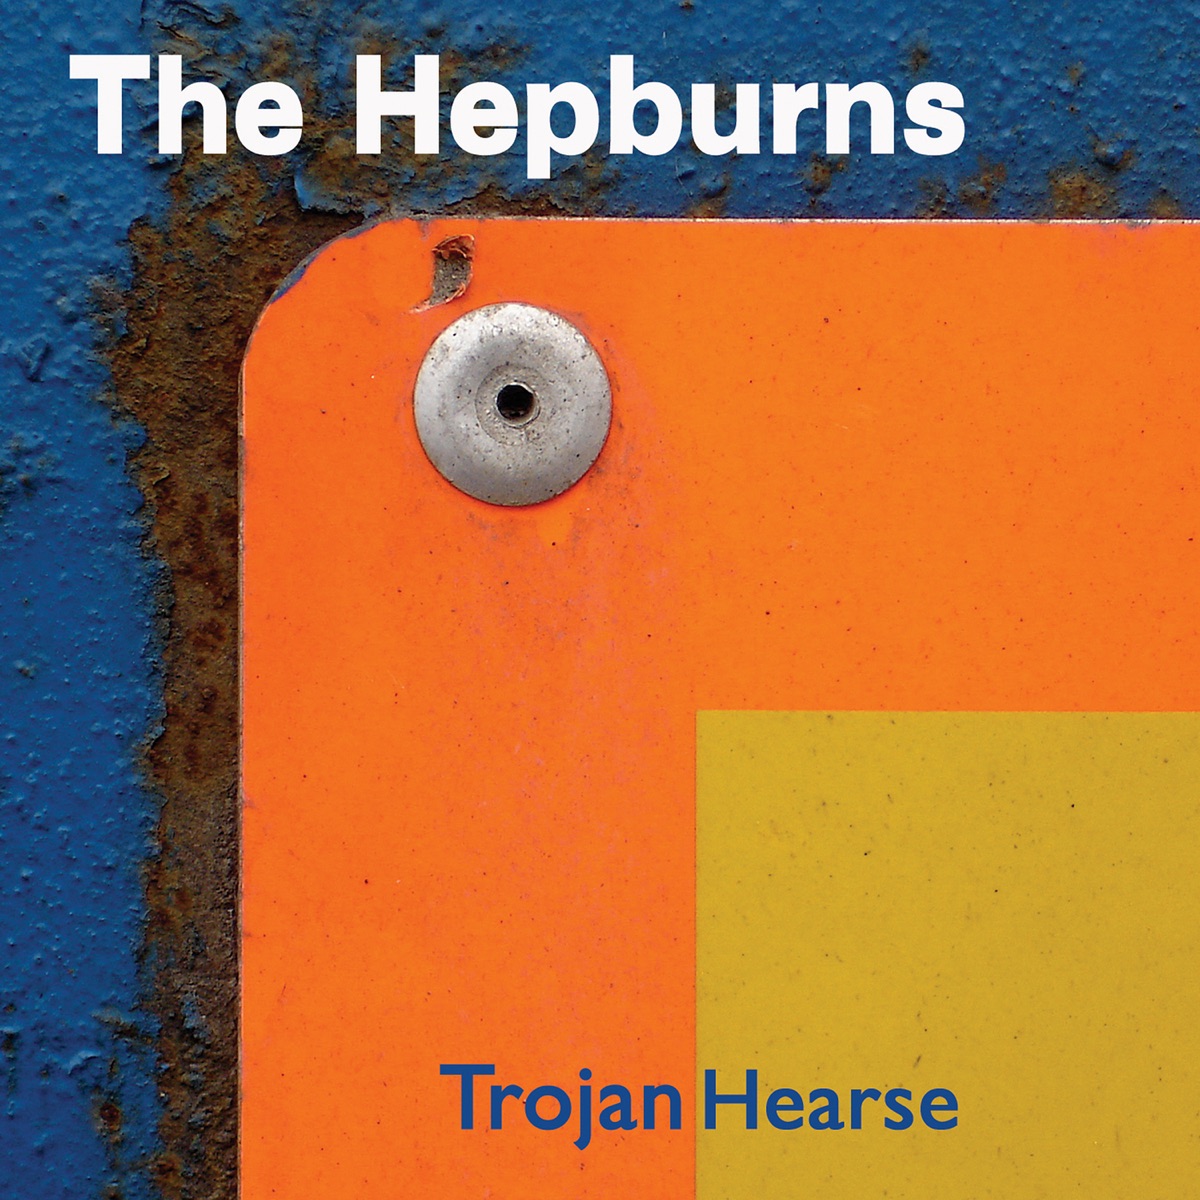 The Magic of the Hepburns - Album by The Hepburns - Apple Music